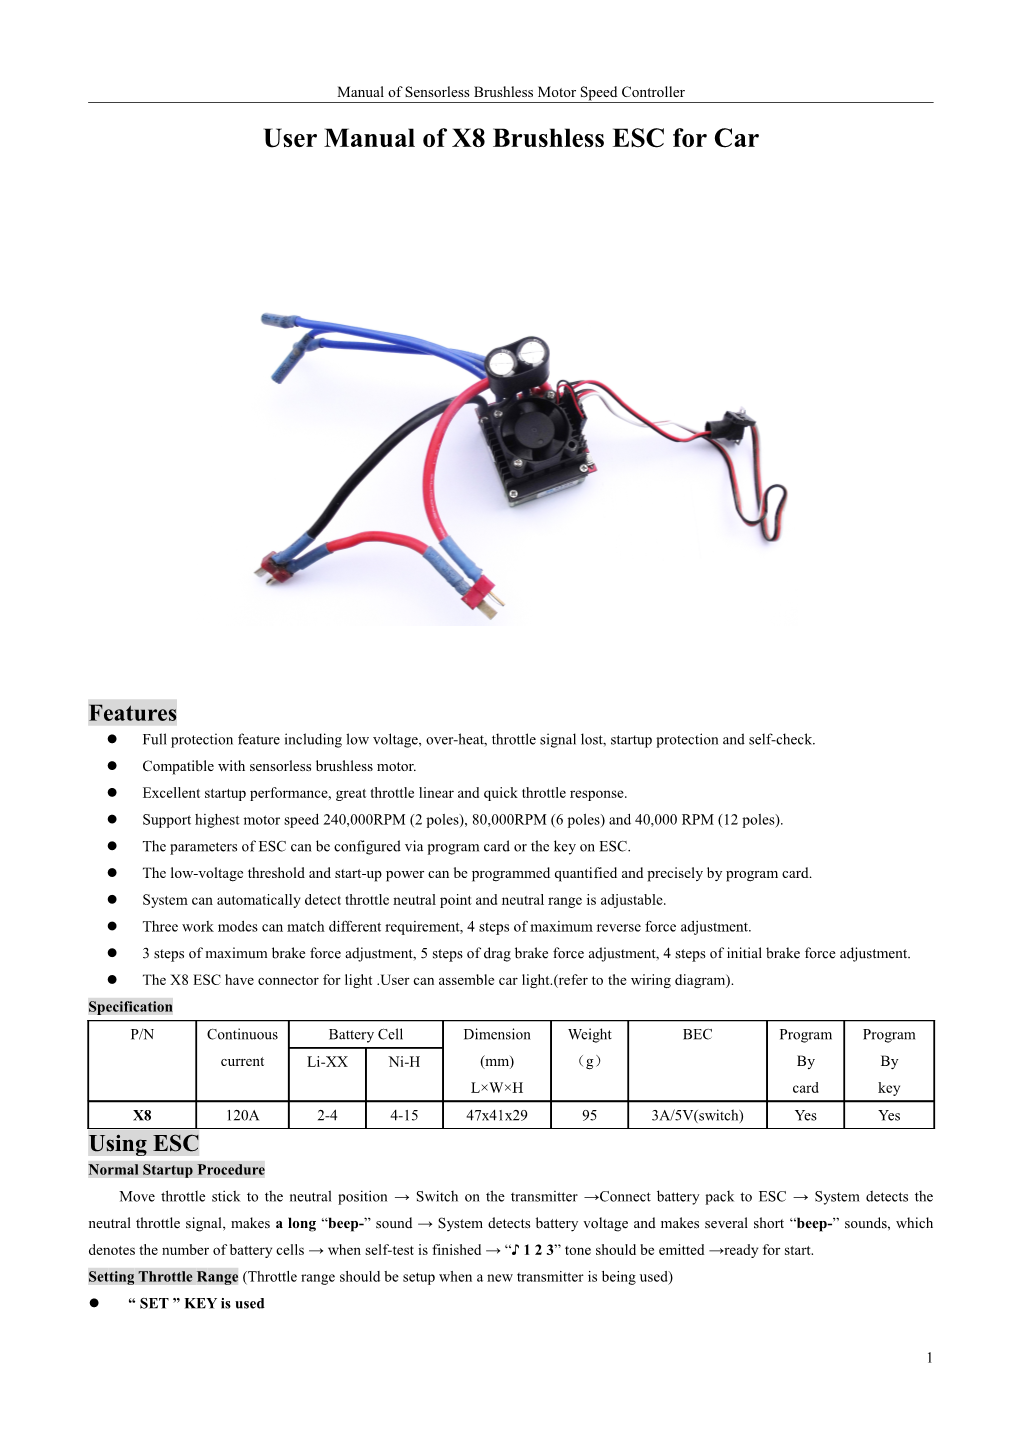 User Manual of Quik Series ESC for Car V2